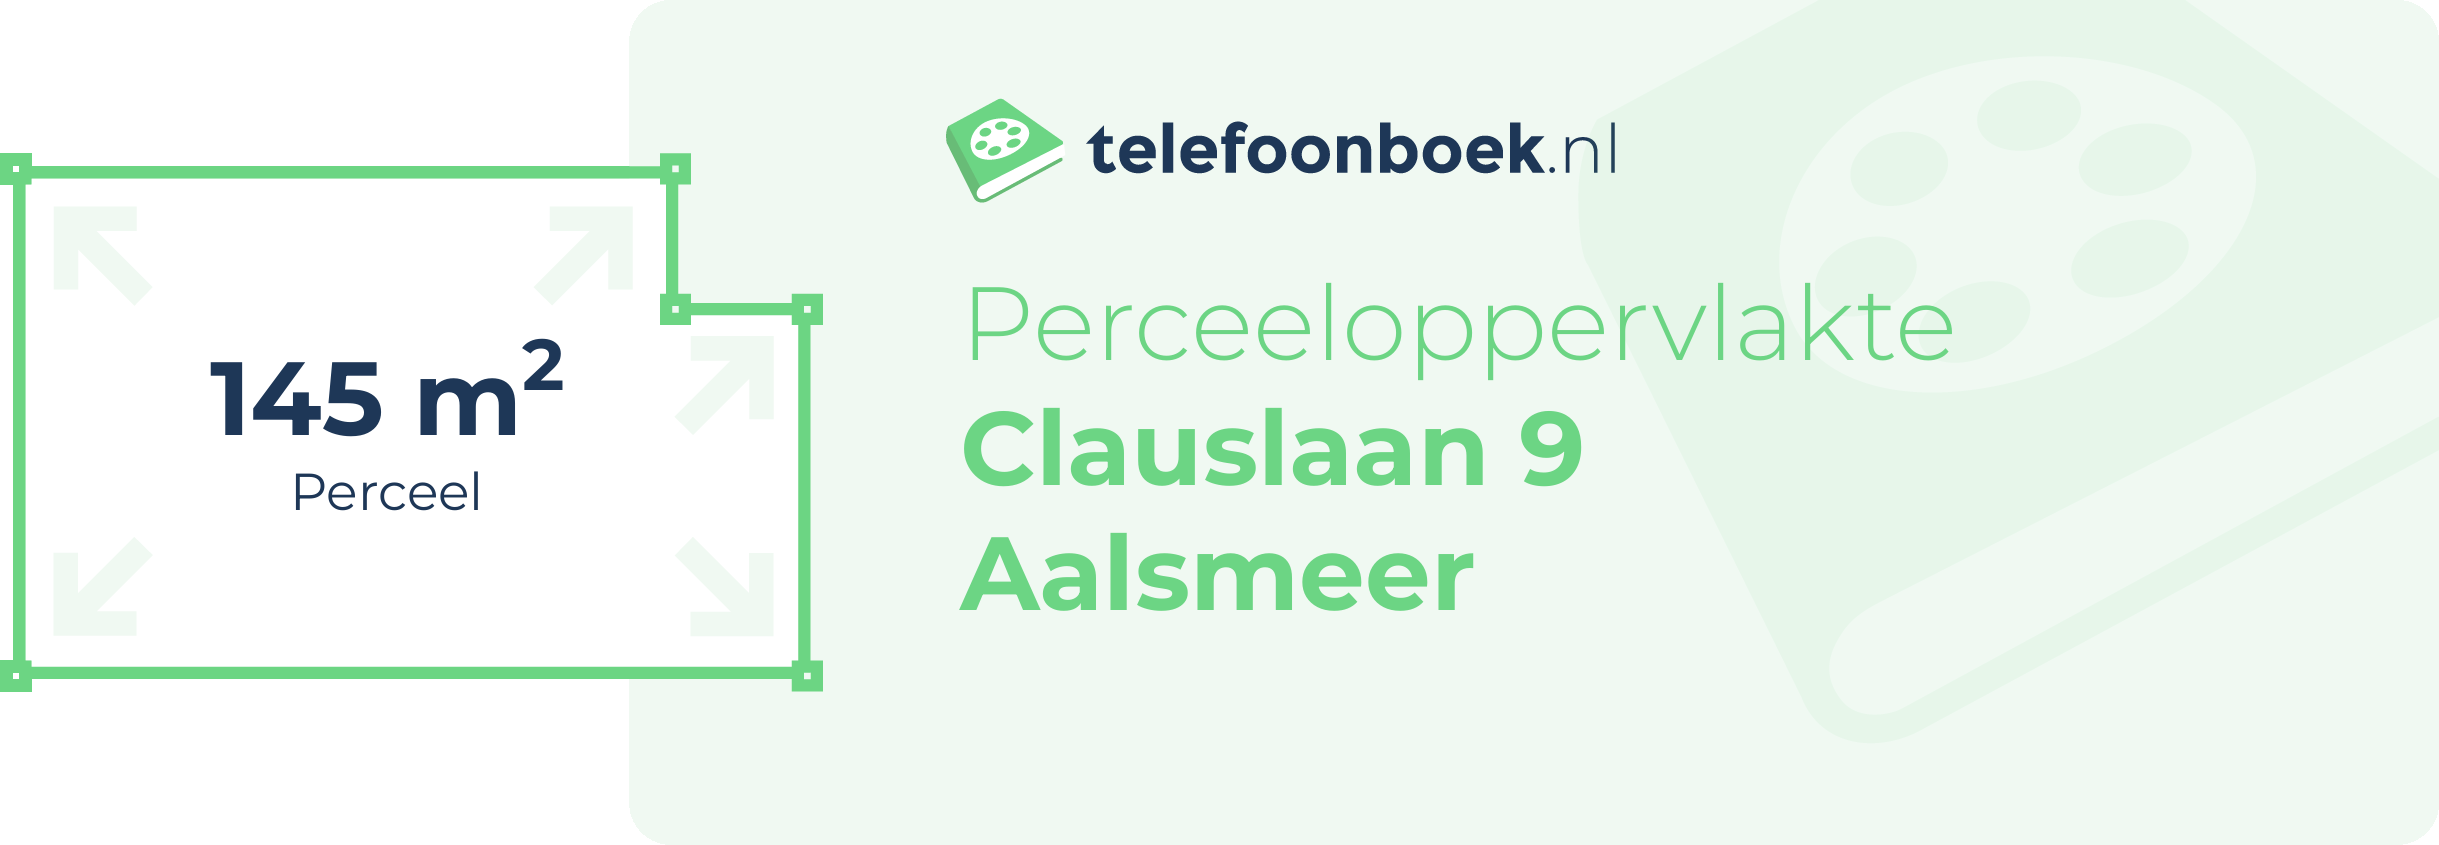 Perceeloppervlakte Clauslaan 9 Aalsmeer